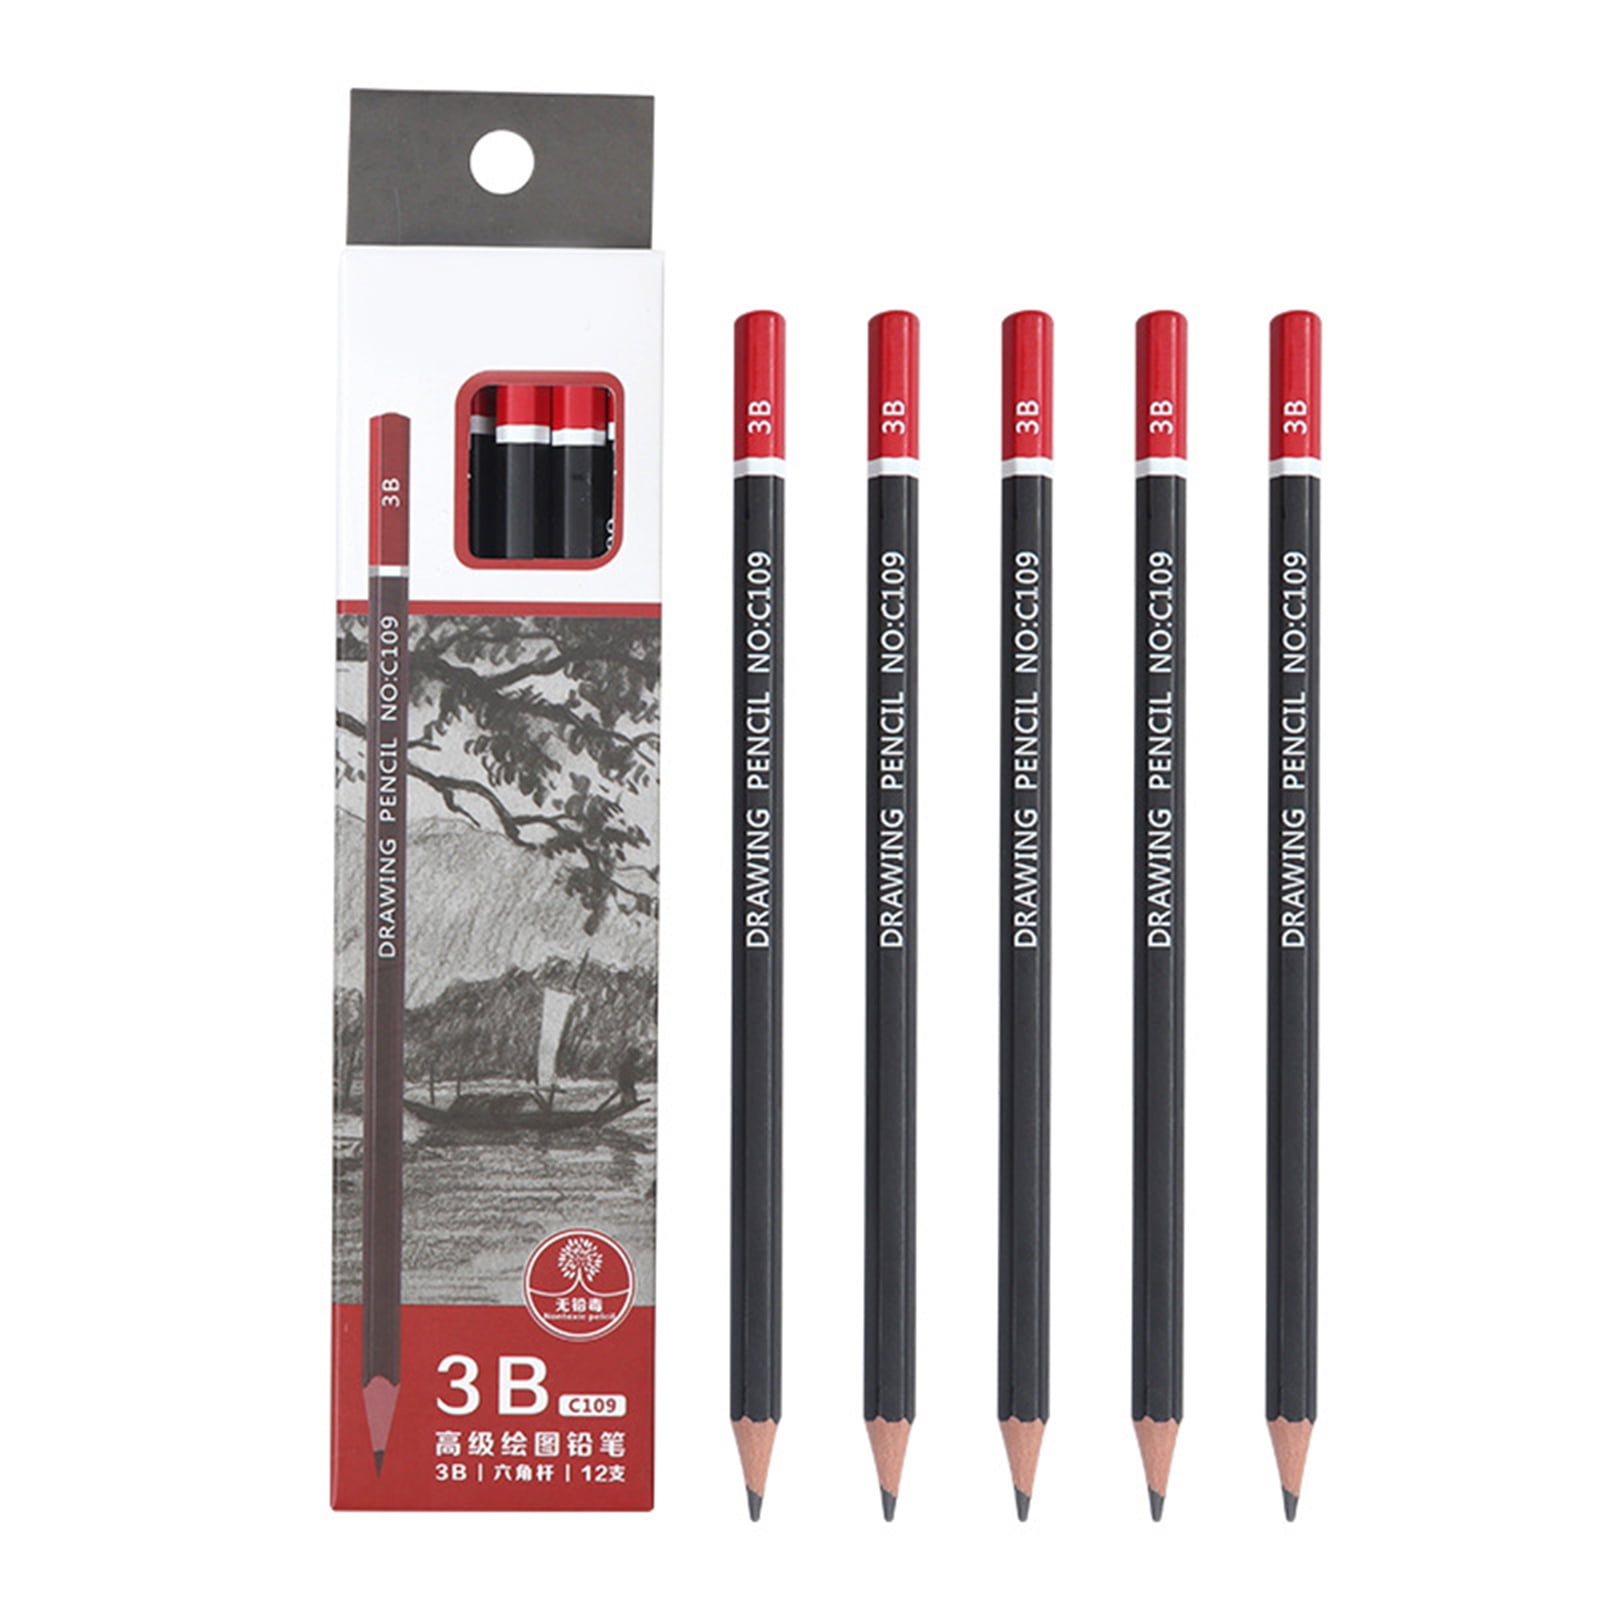 KongLyle Professional Drawing Sketching Pencil Set 12Pcs Graphite